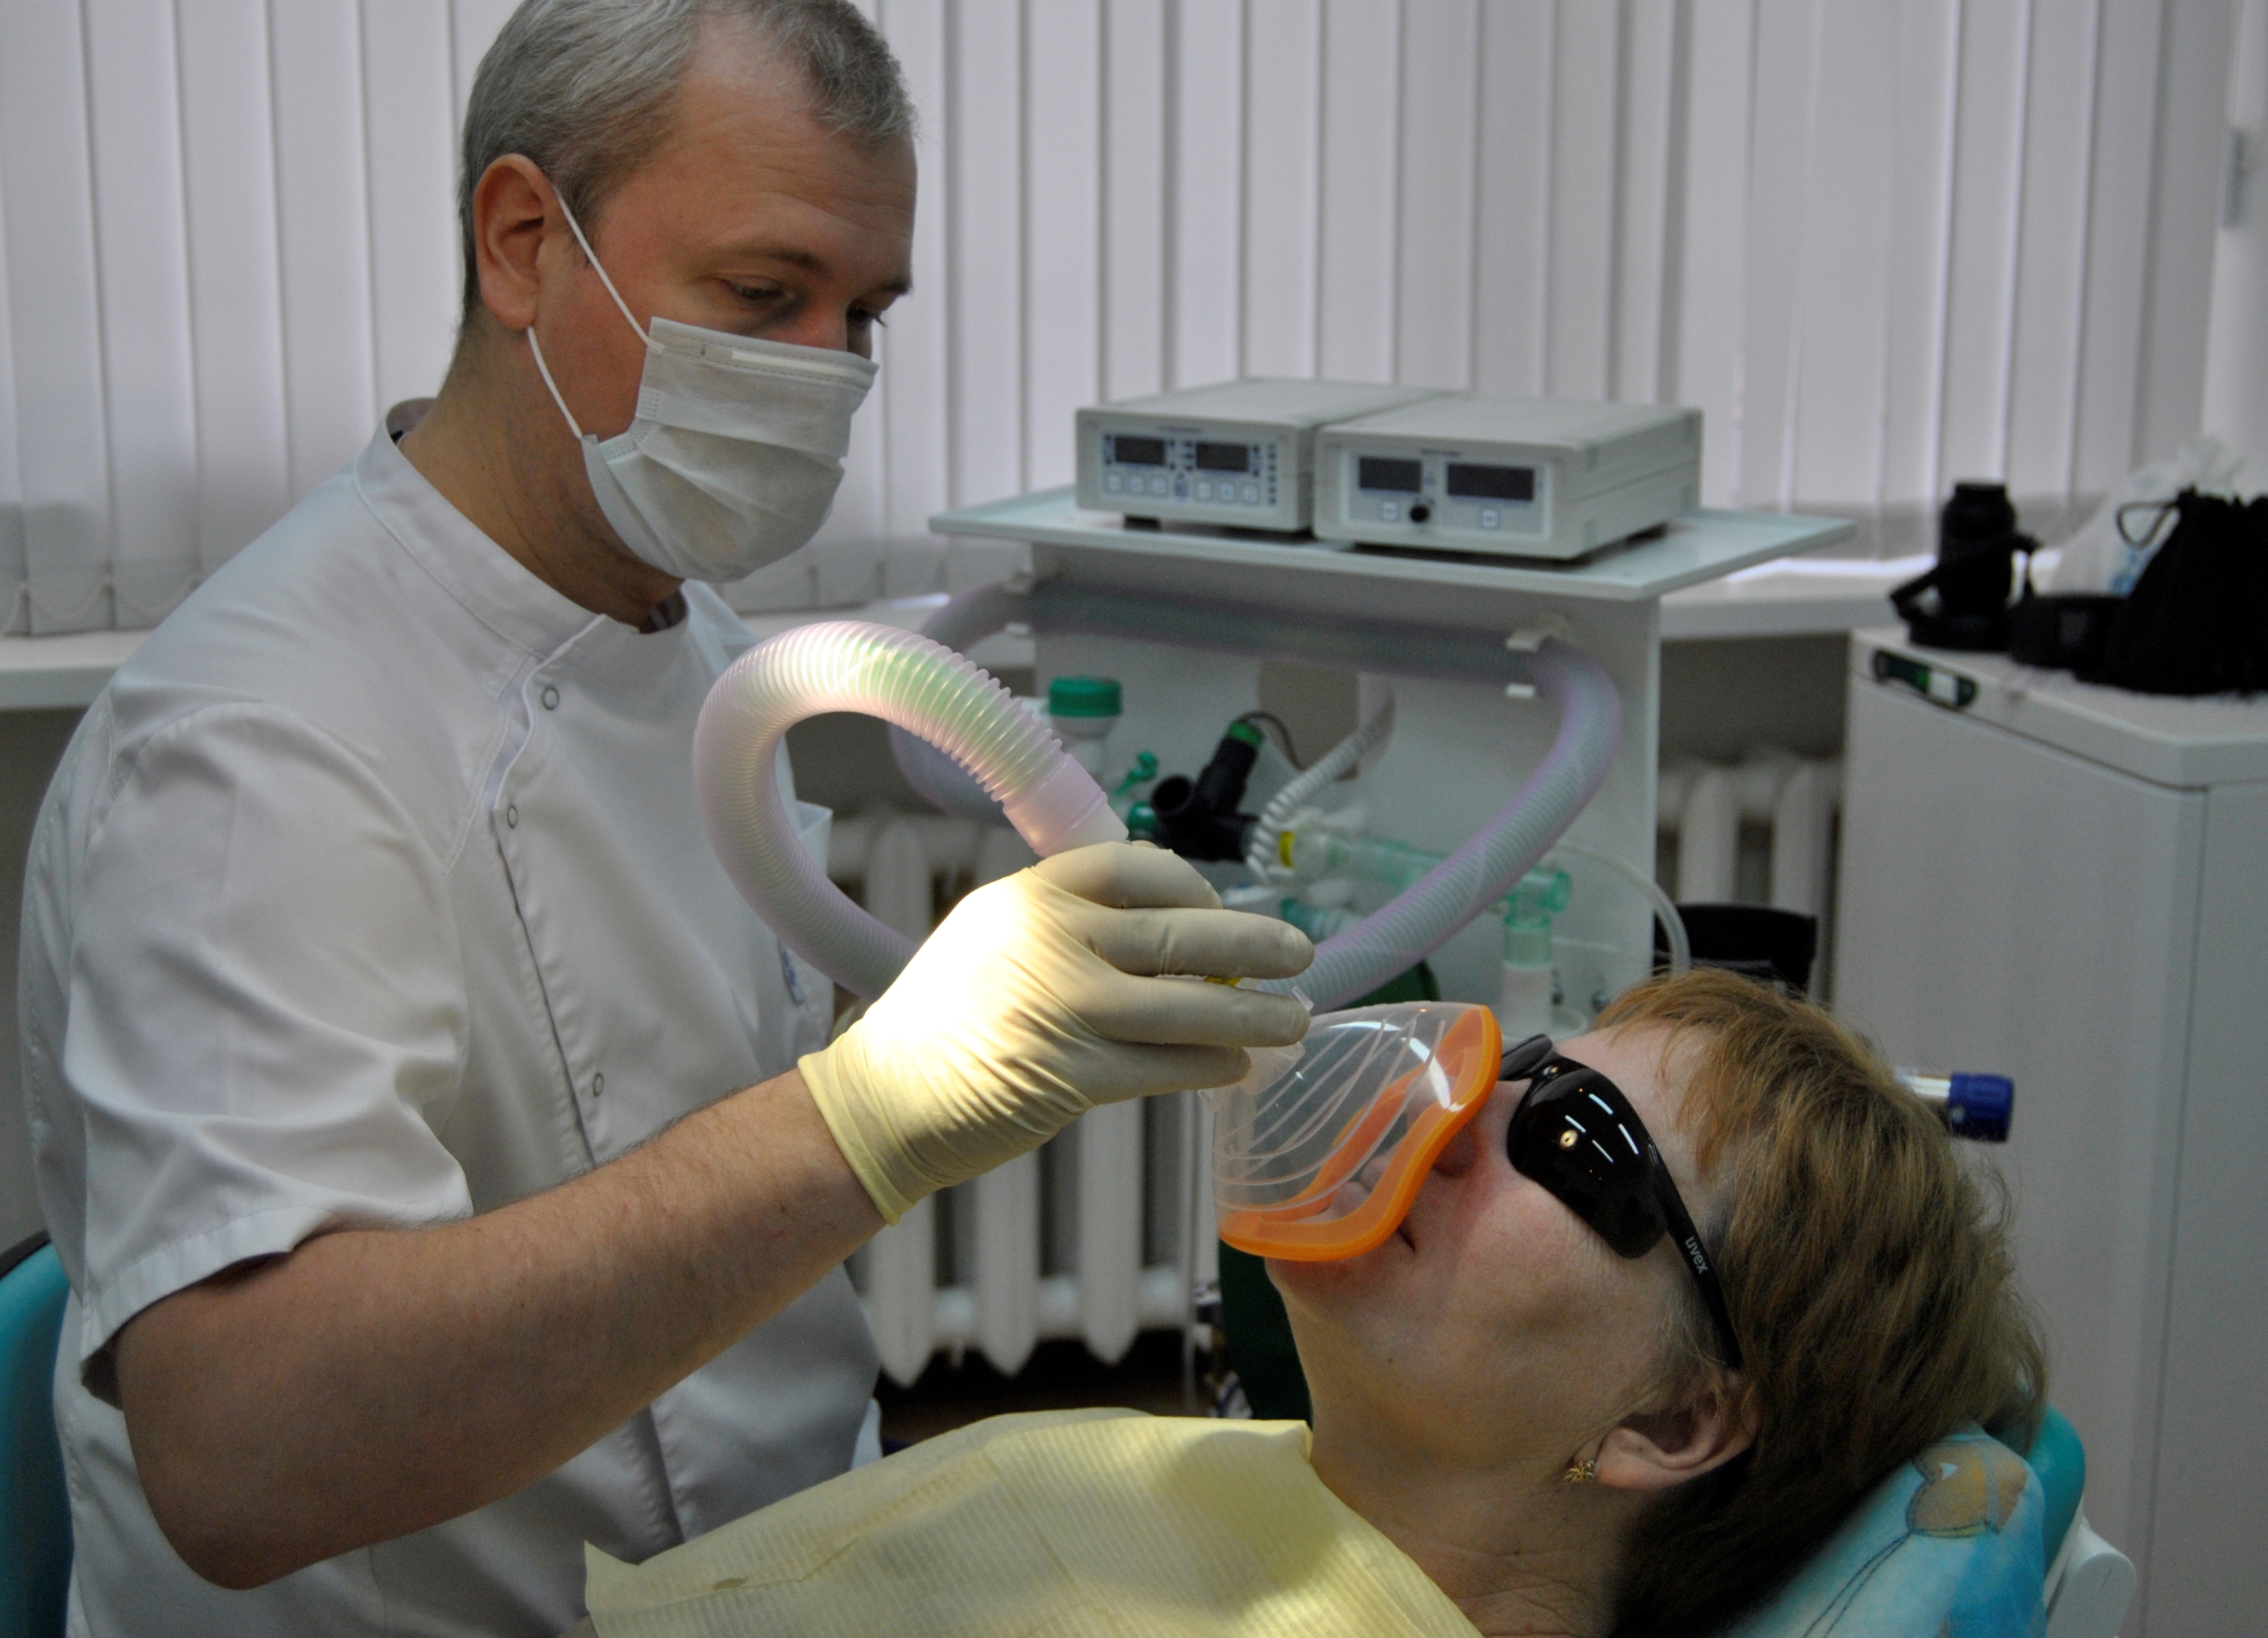 Ксенон терапия. Аппарат Matrix седация с севораном. Стоматология под наркозом. Общий наркоз в стоматологии. Зуб под общим наркозом.